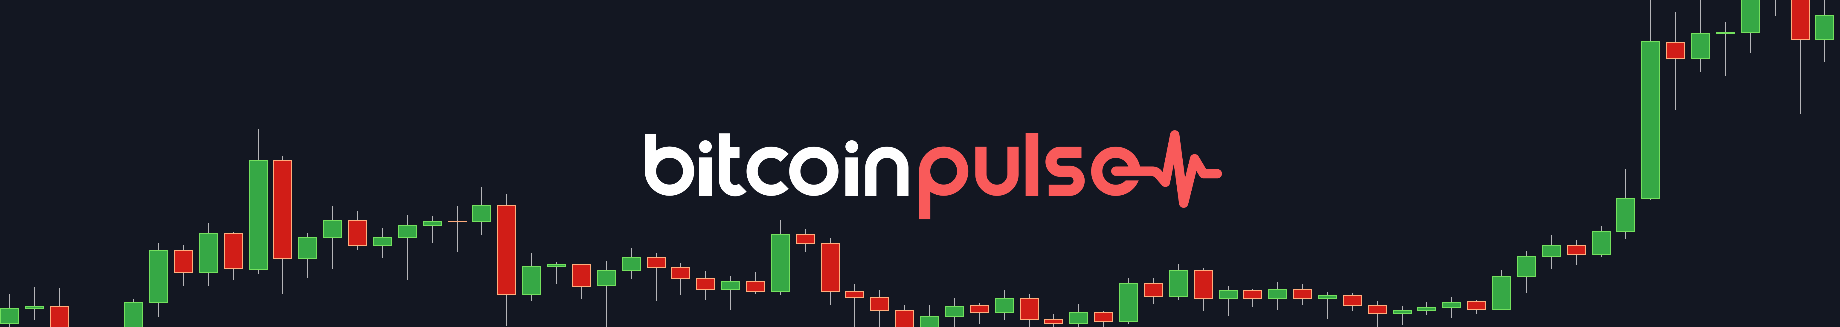 Up, Up, Up - Bitcoin Pulse #91